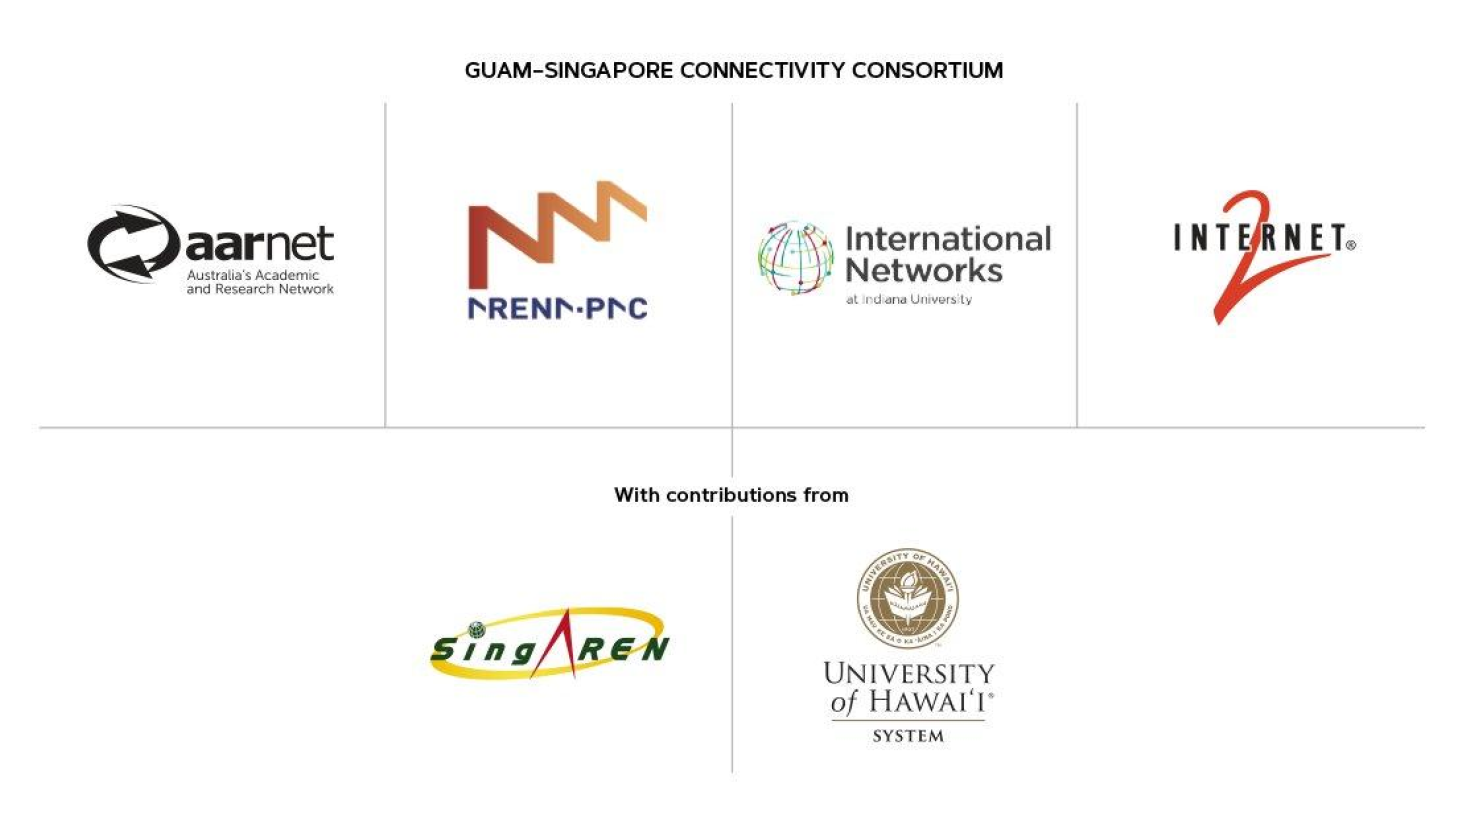 Guam-Singapore Connectivity Consortium partners and contributors